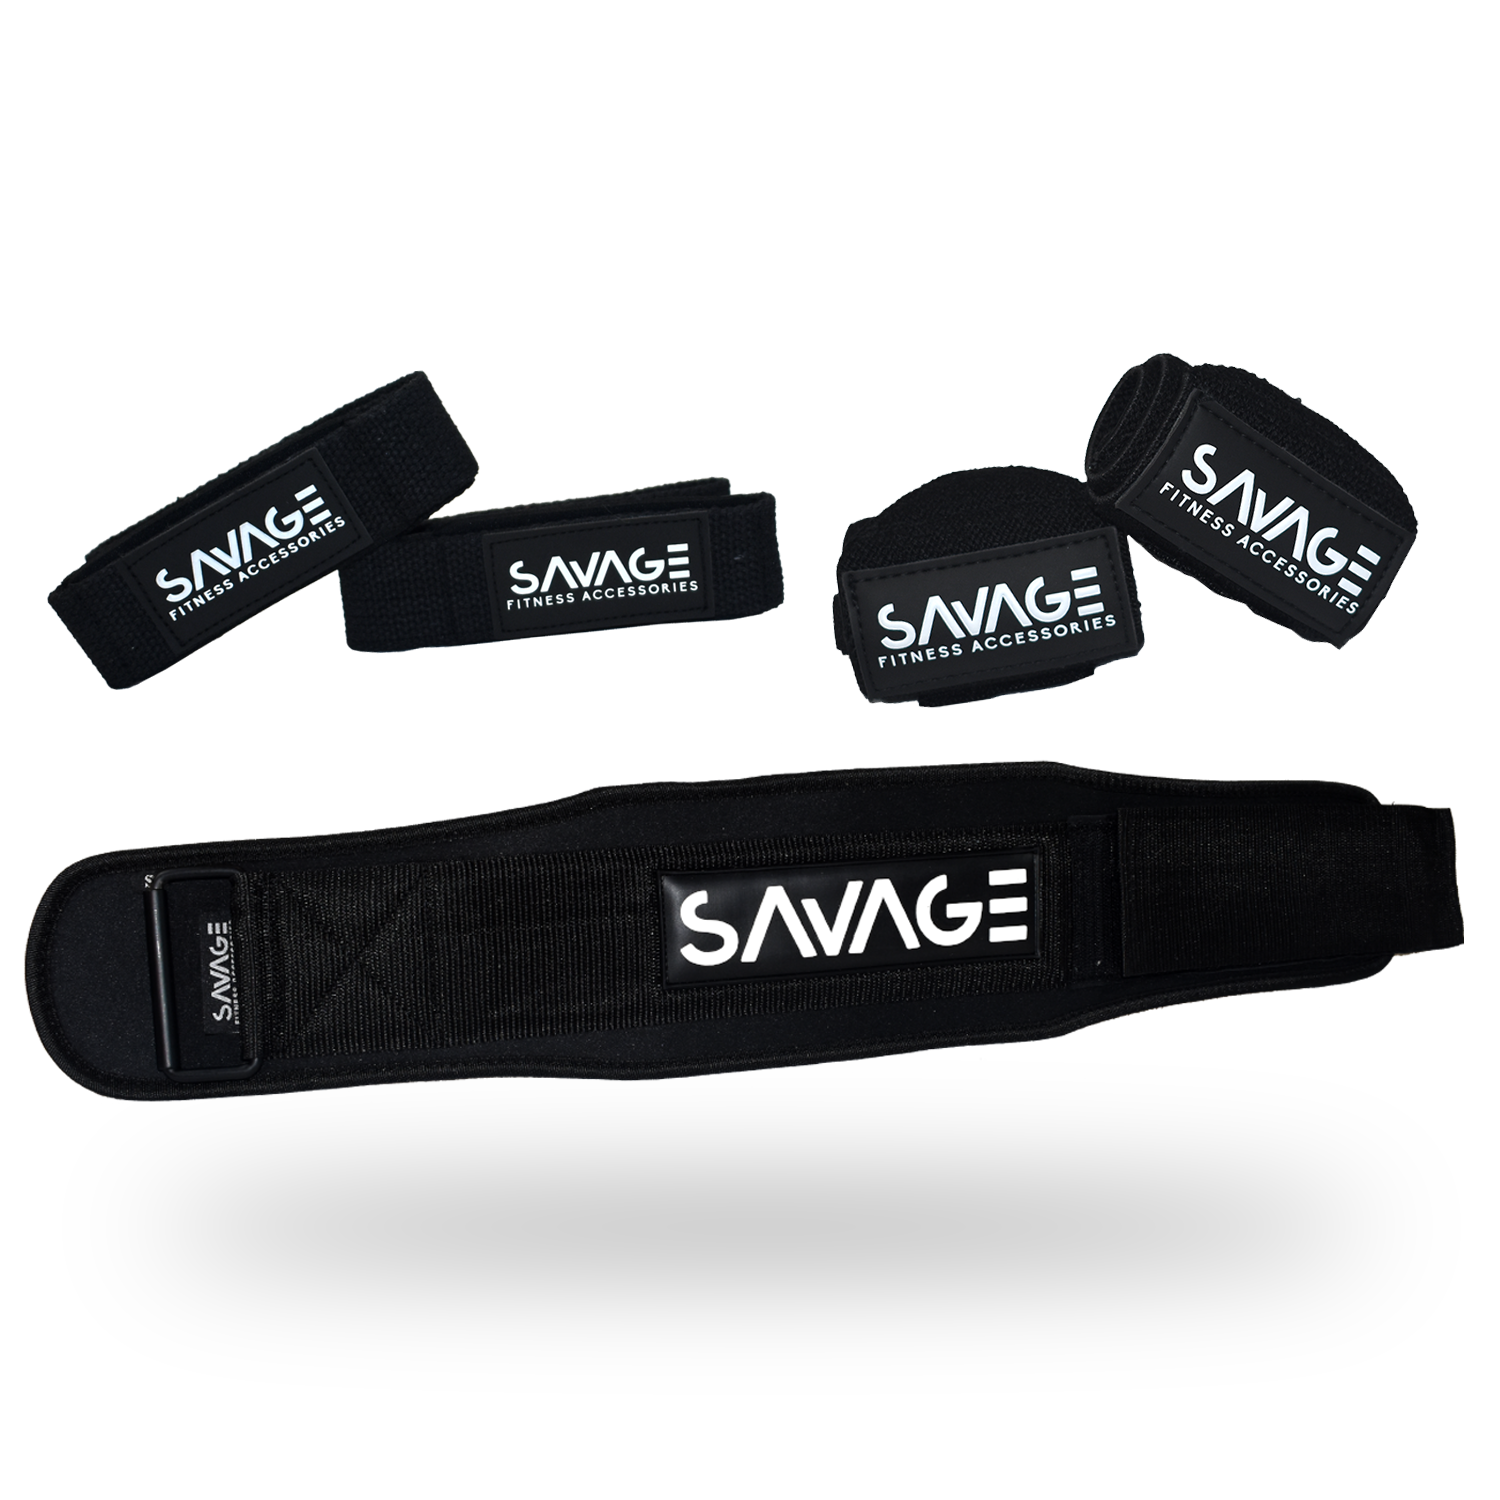 Bundle Packs – Savage Fitness Accessories